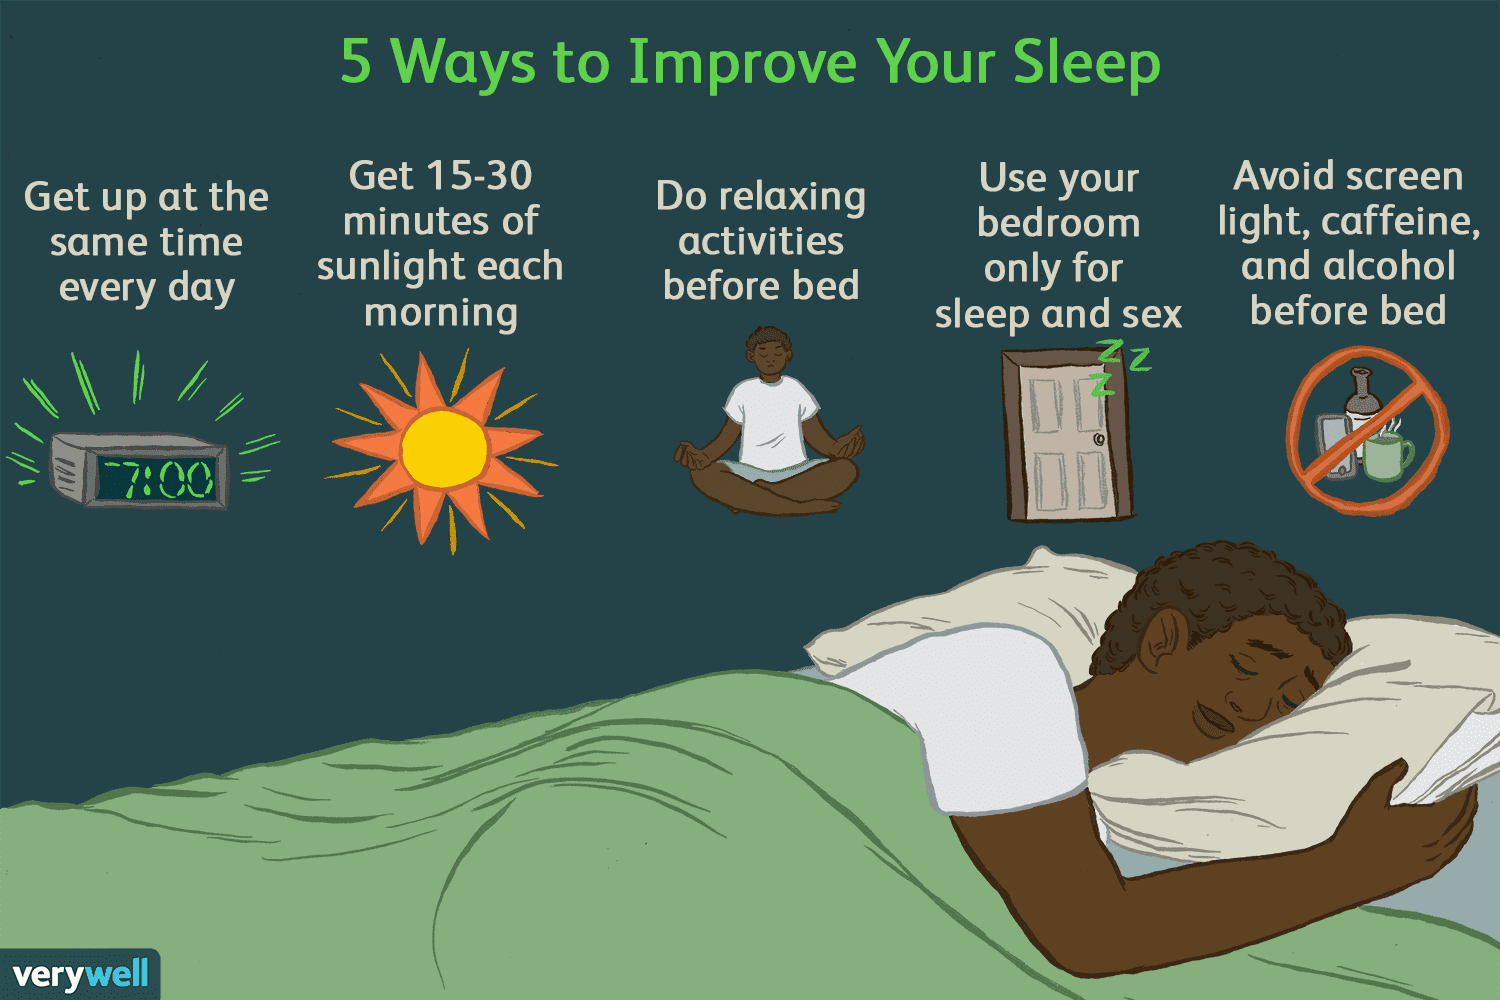 Sleep well cg5 текст. Улучшение сна. Best Sleep time. To improve Sleep. Иллюстрация как улучшить сон.